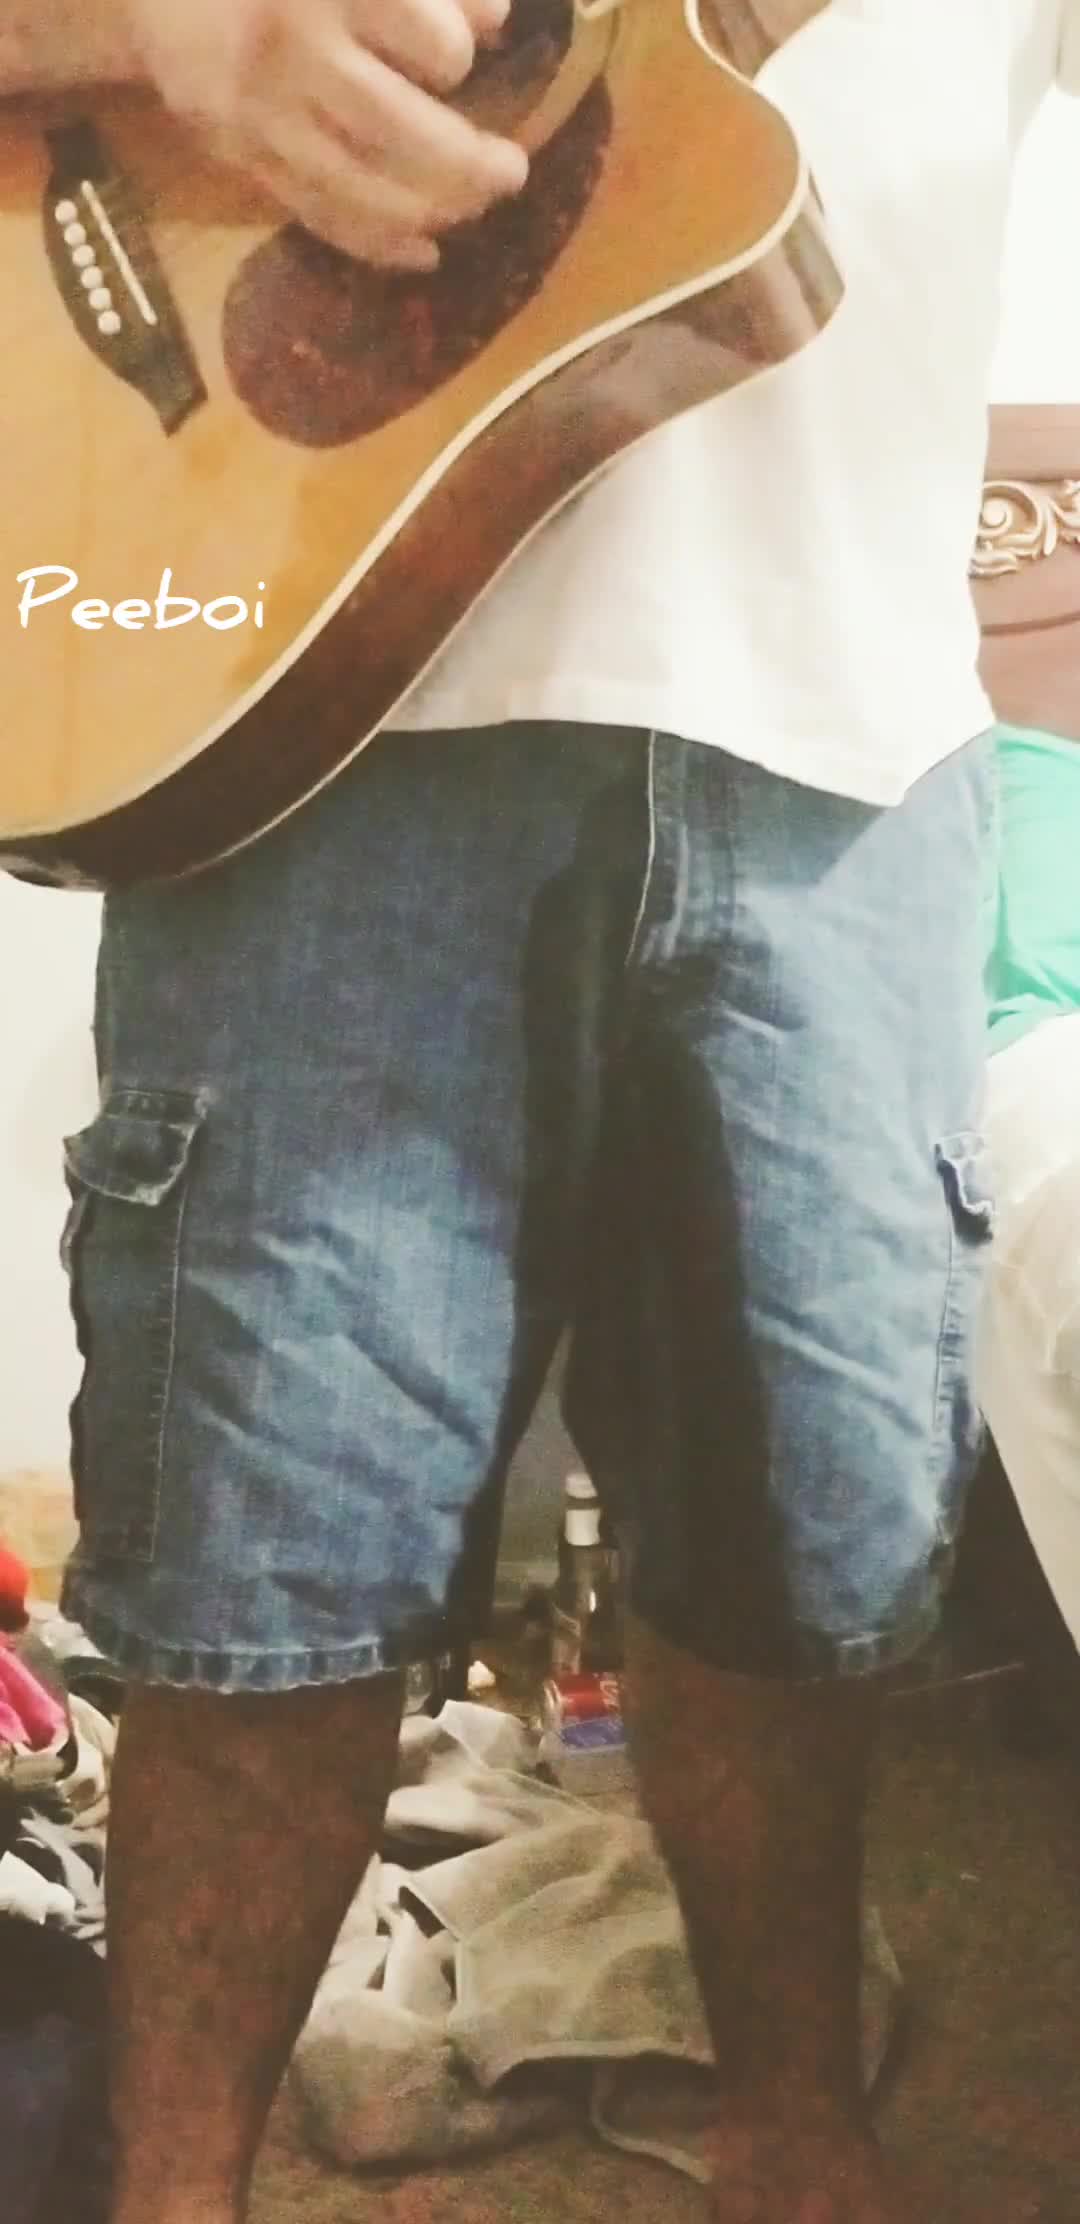 Peeboi - Long Hair Double Vaginal Auditions